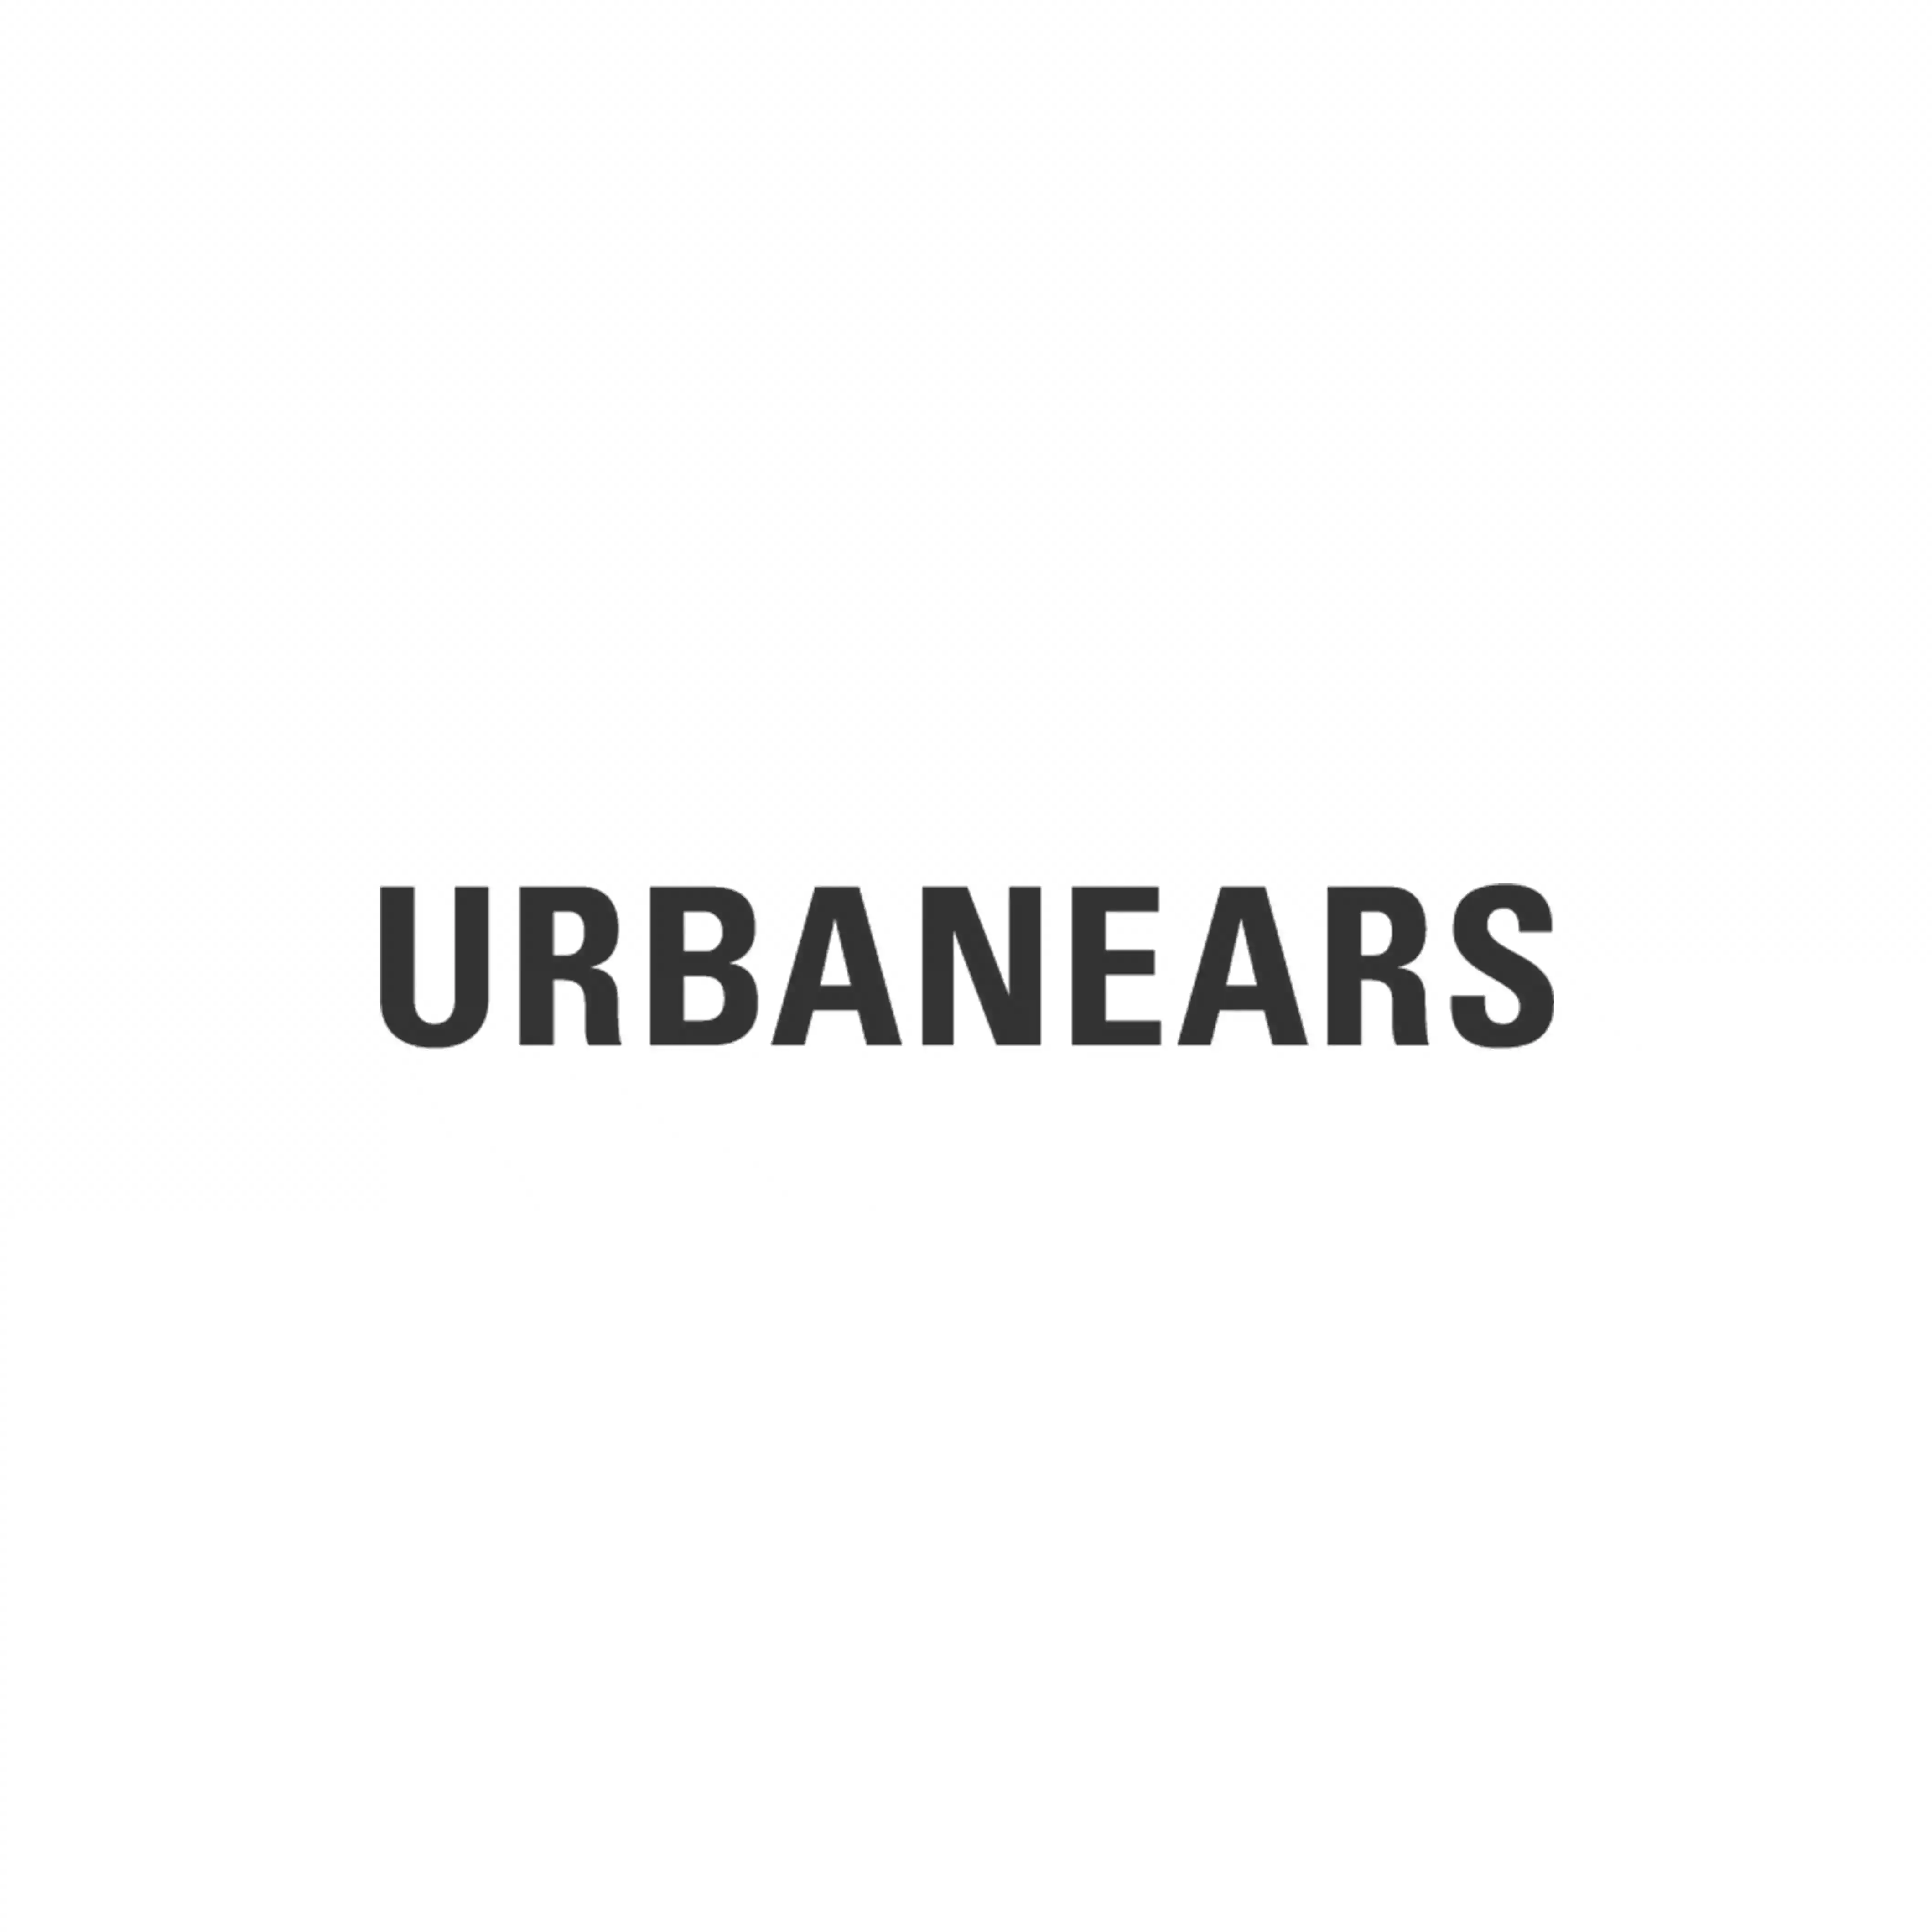 Urbanears coupon codes